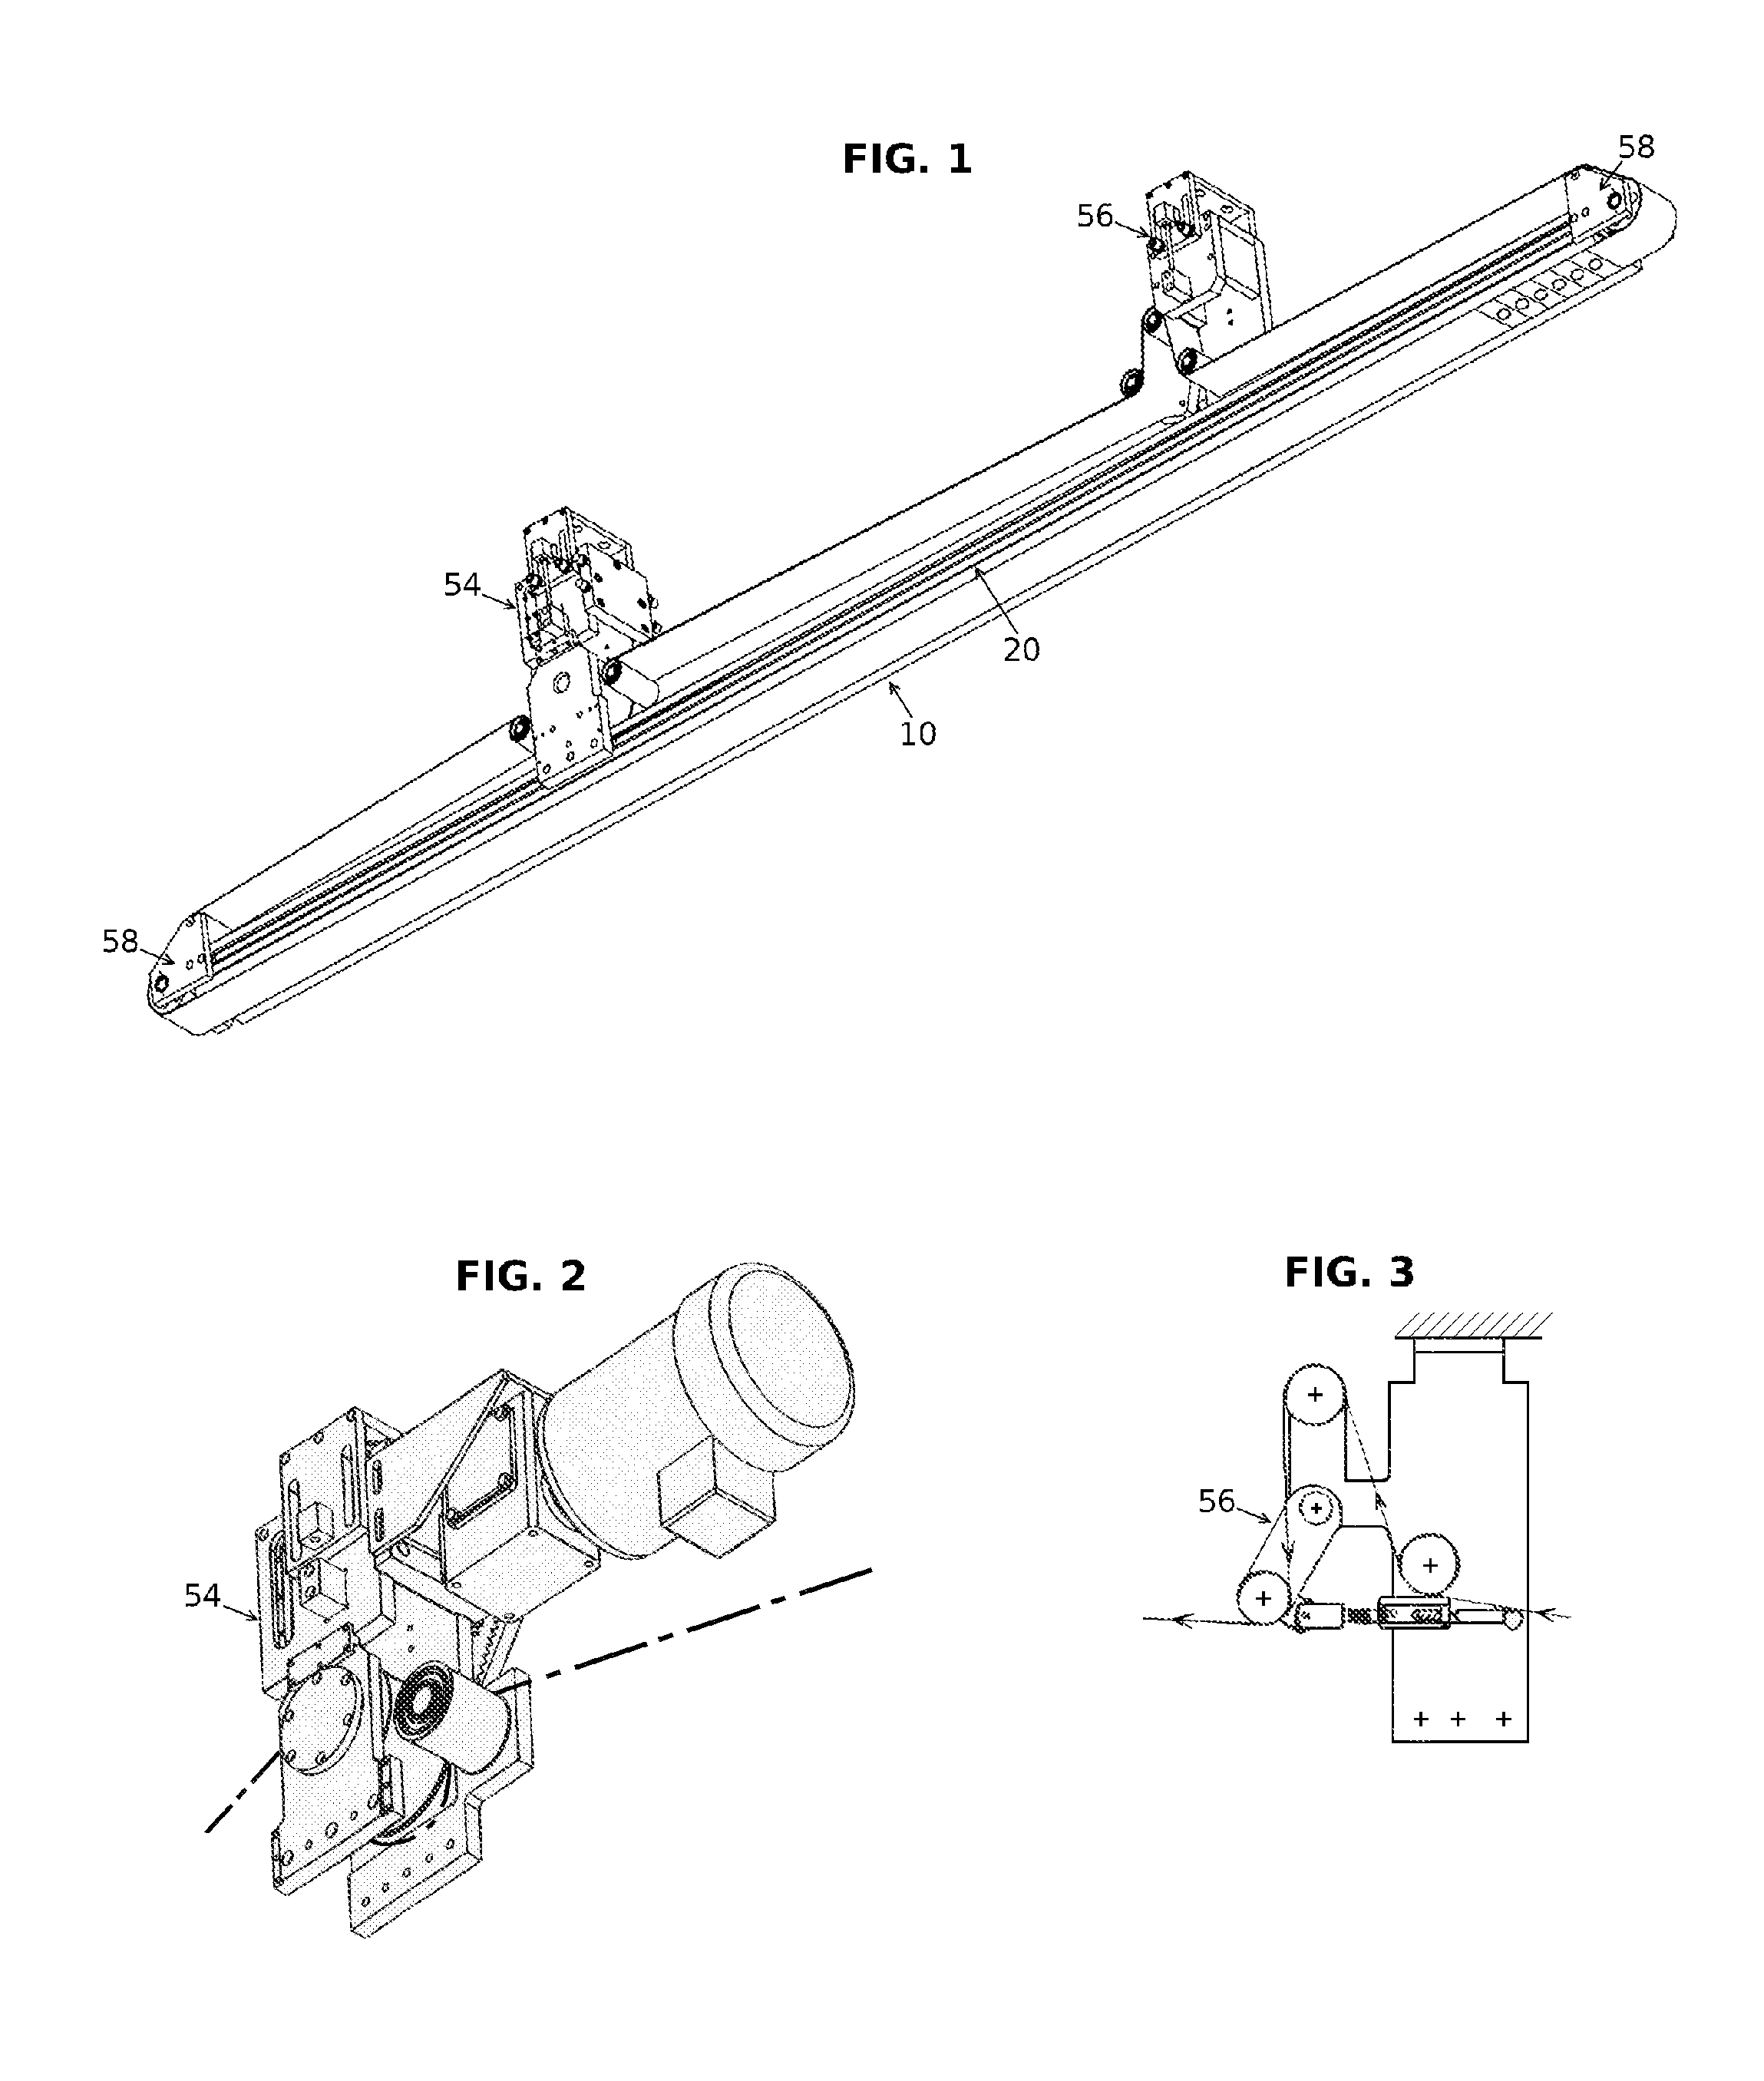 Inverted vacuum belt conveyor system